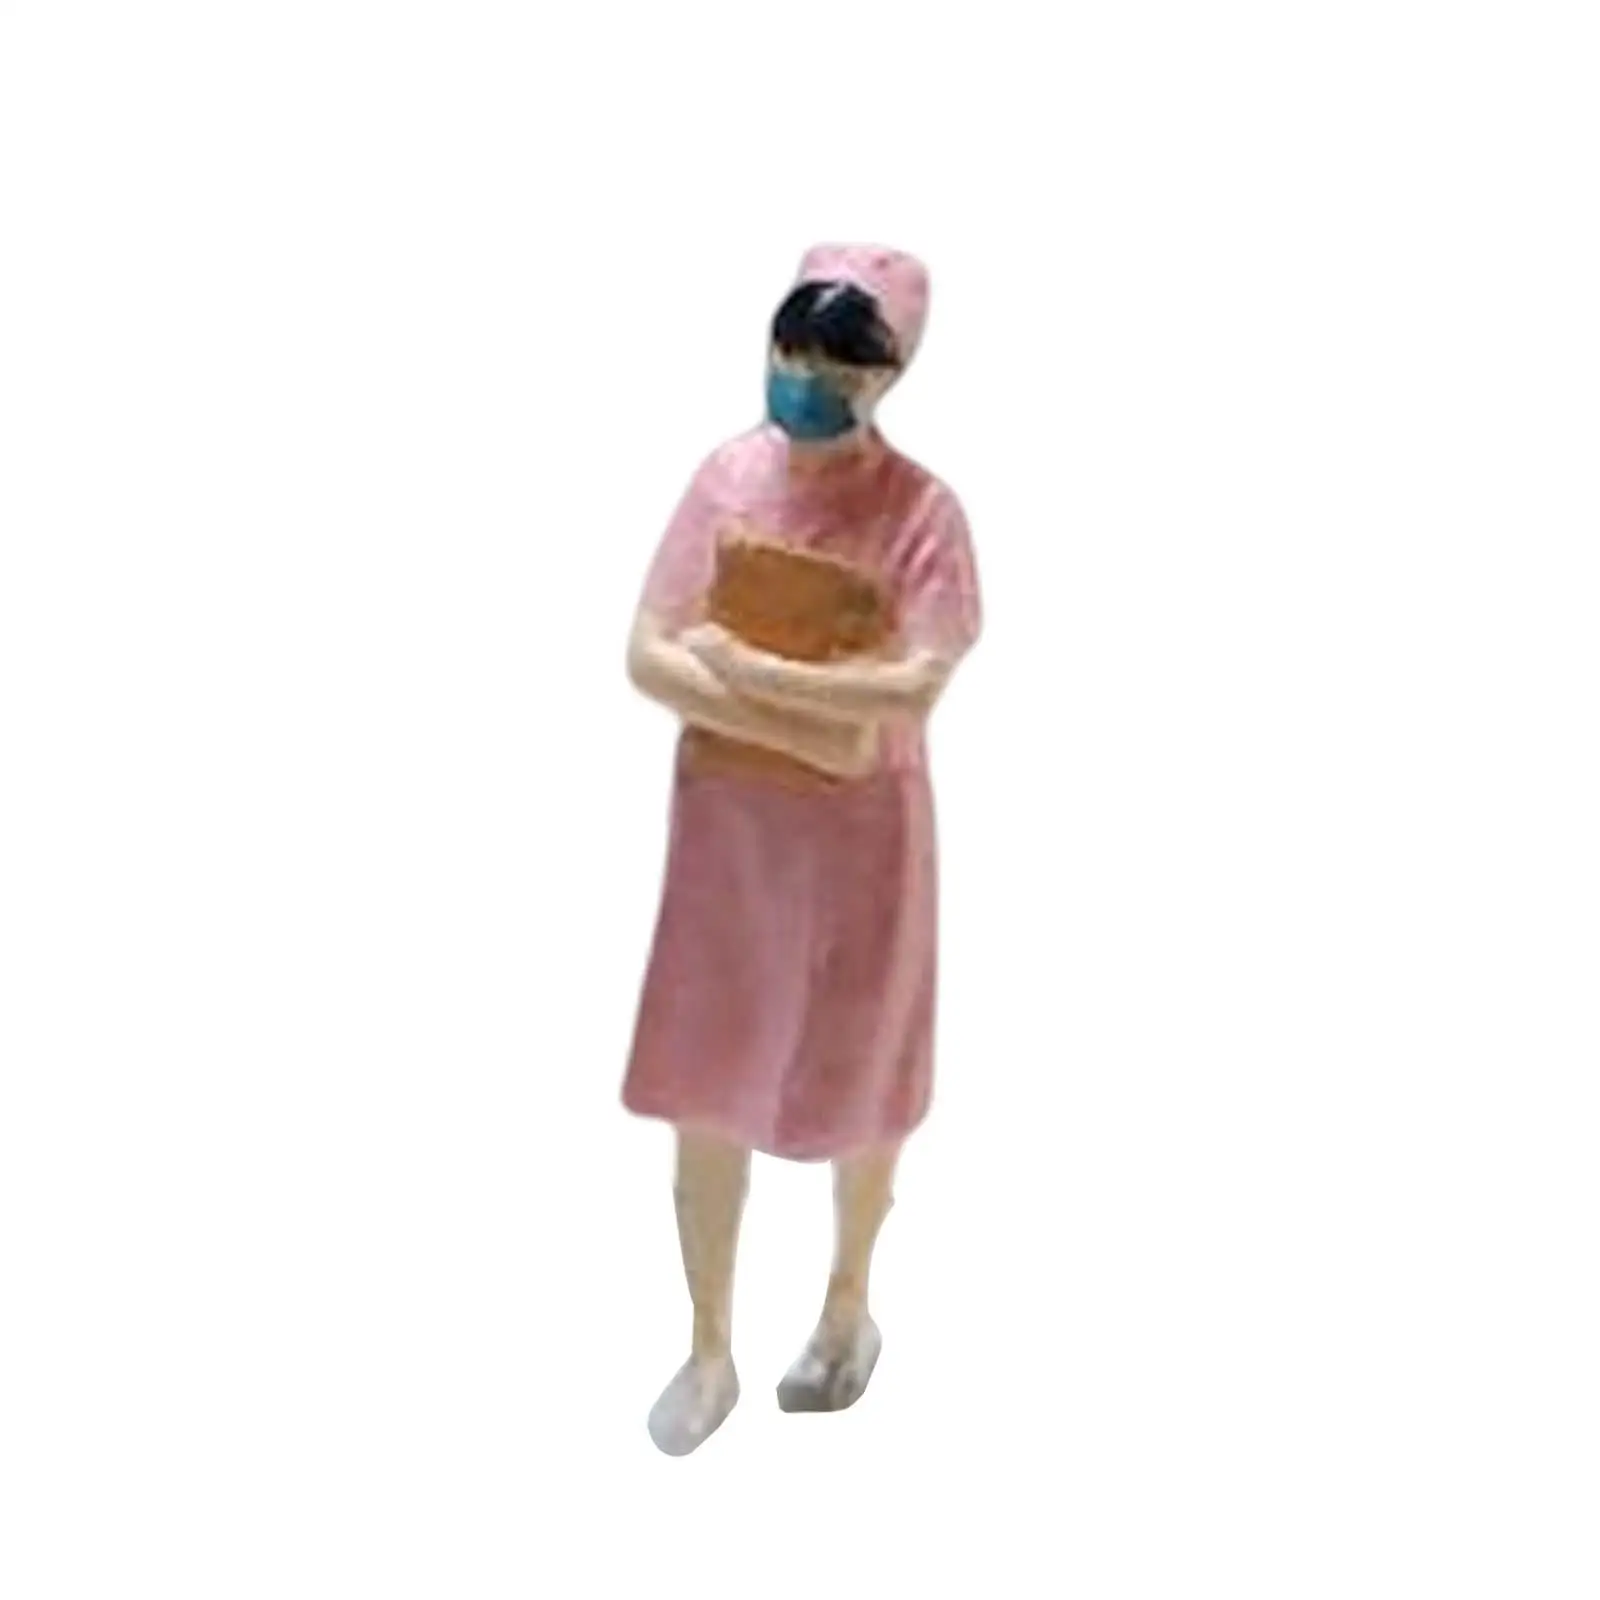 1/64 People Figure Tiny Nurse Statue Small Person Sculpture Railway Layout